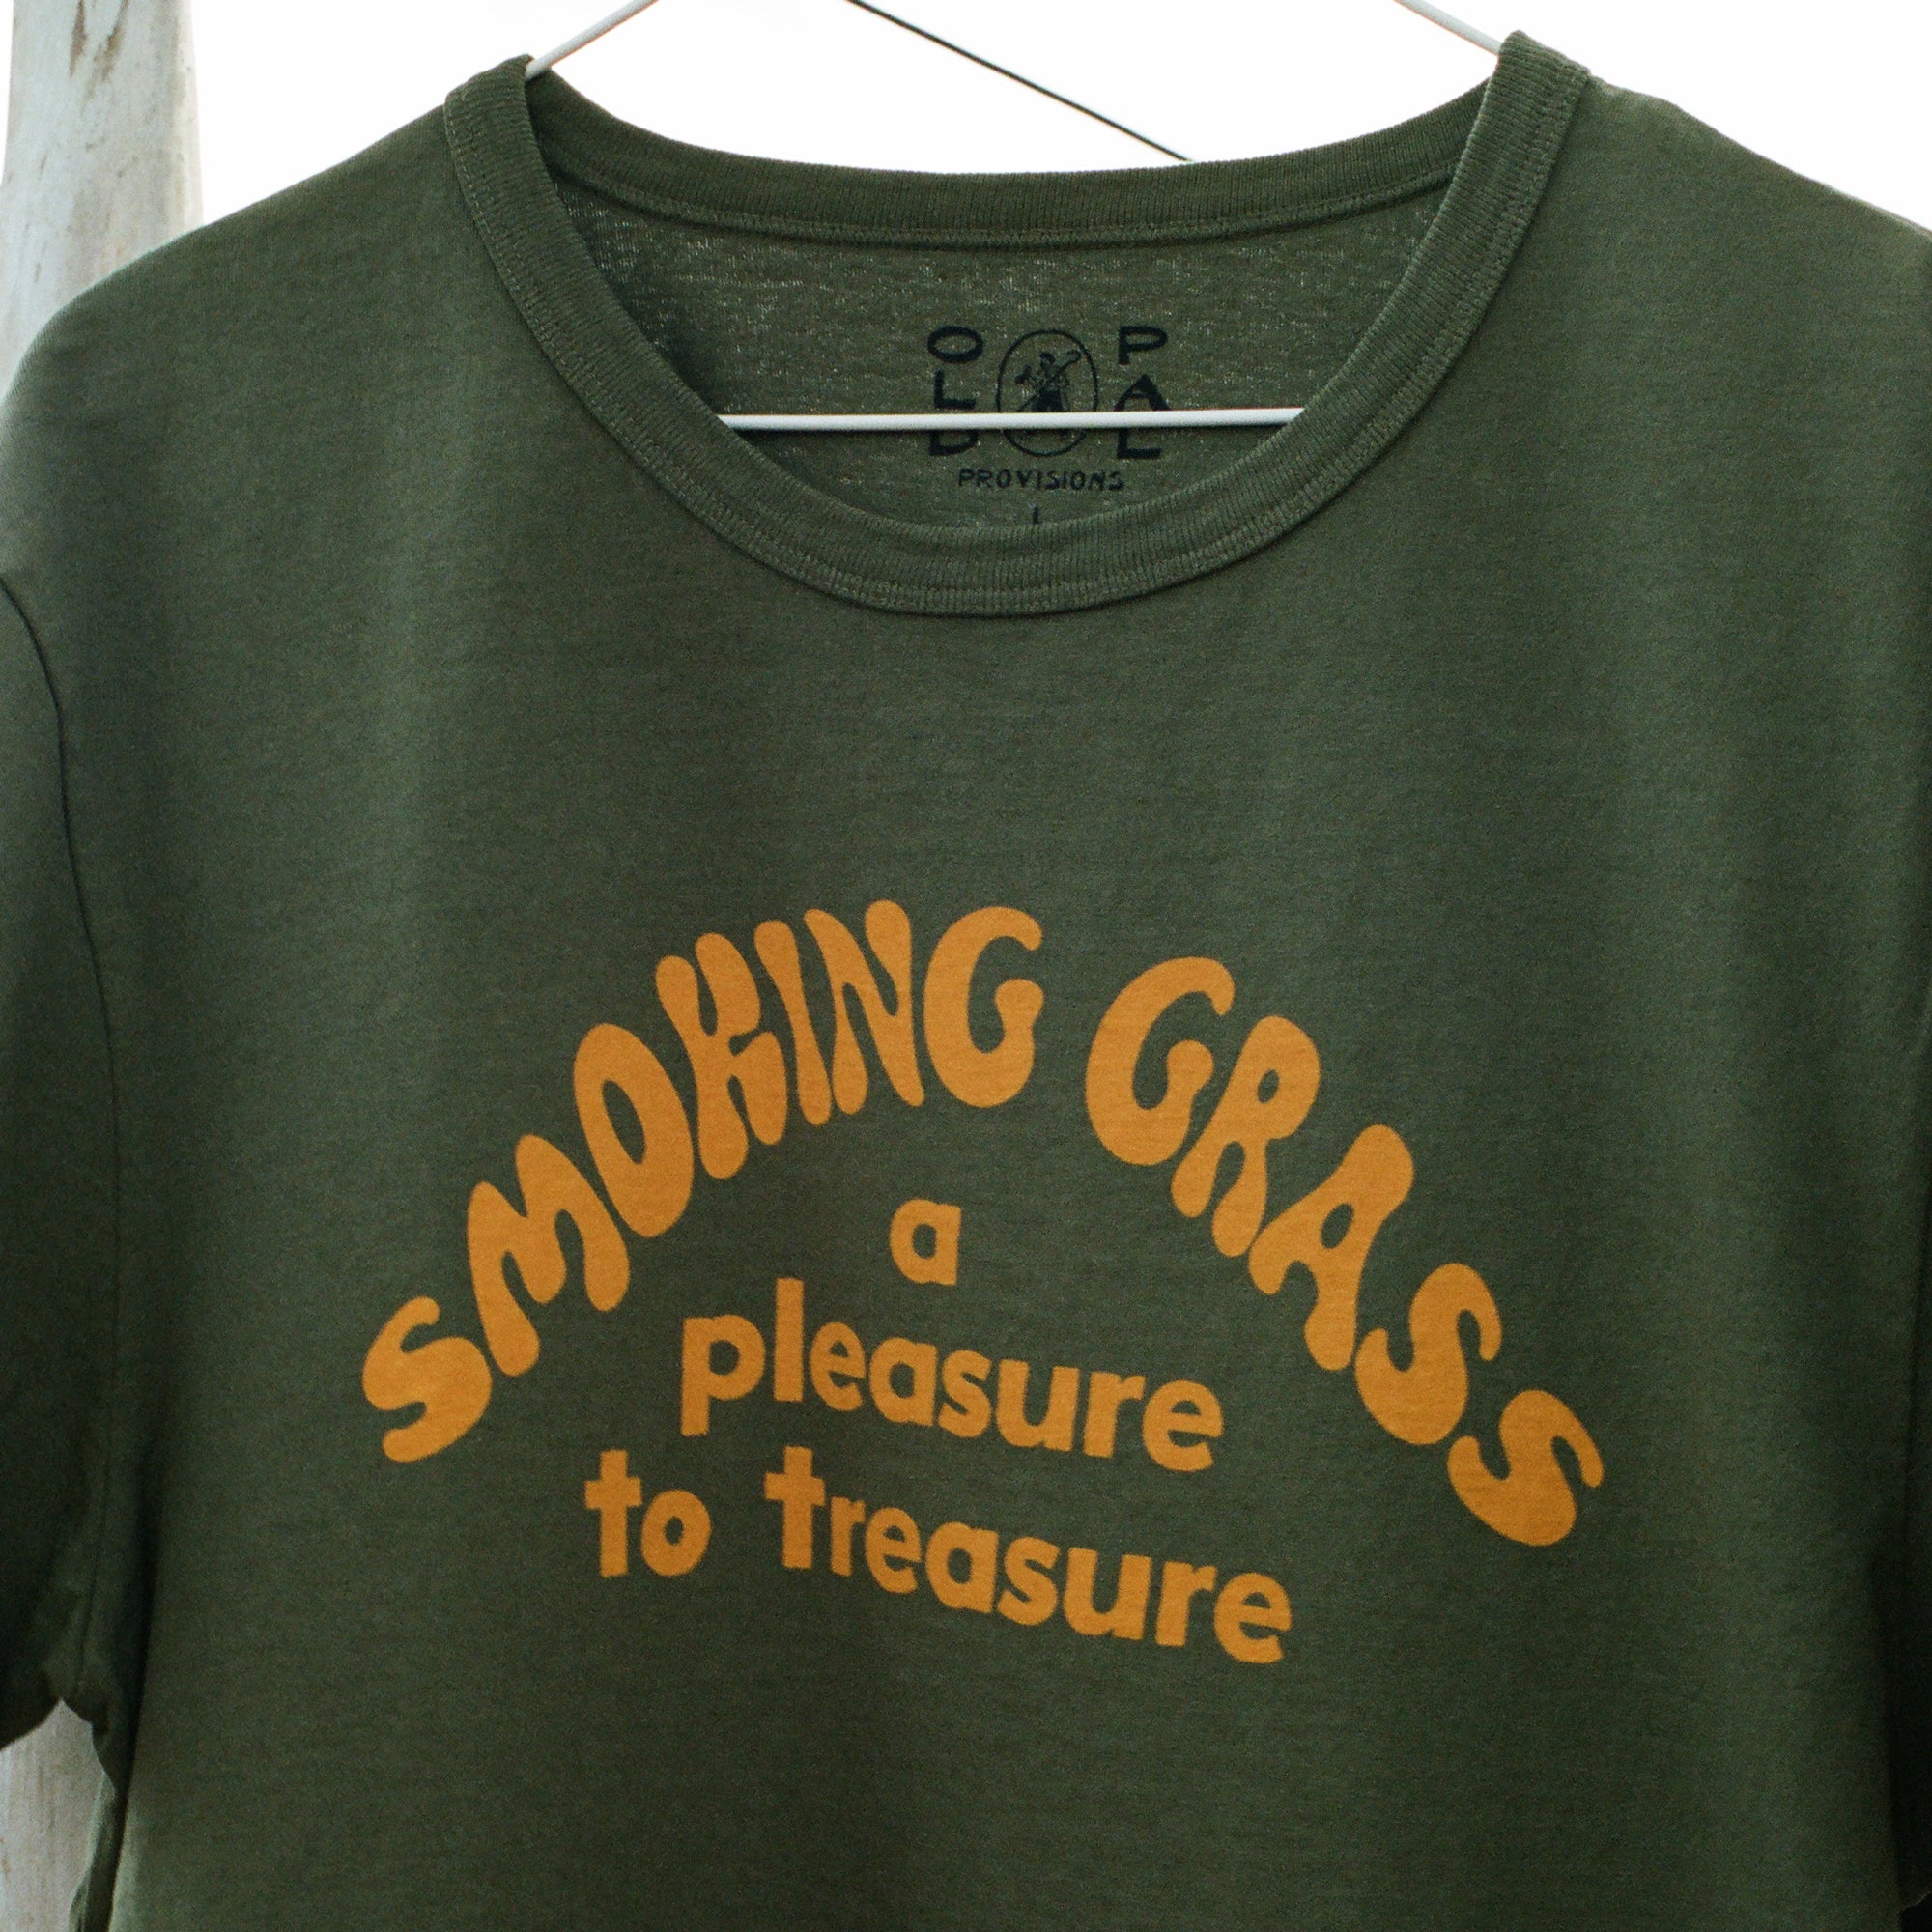 Pleasure to Treasure Shirt